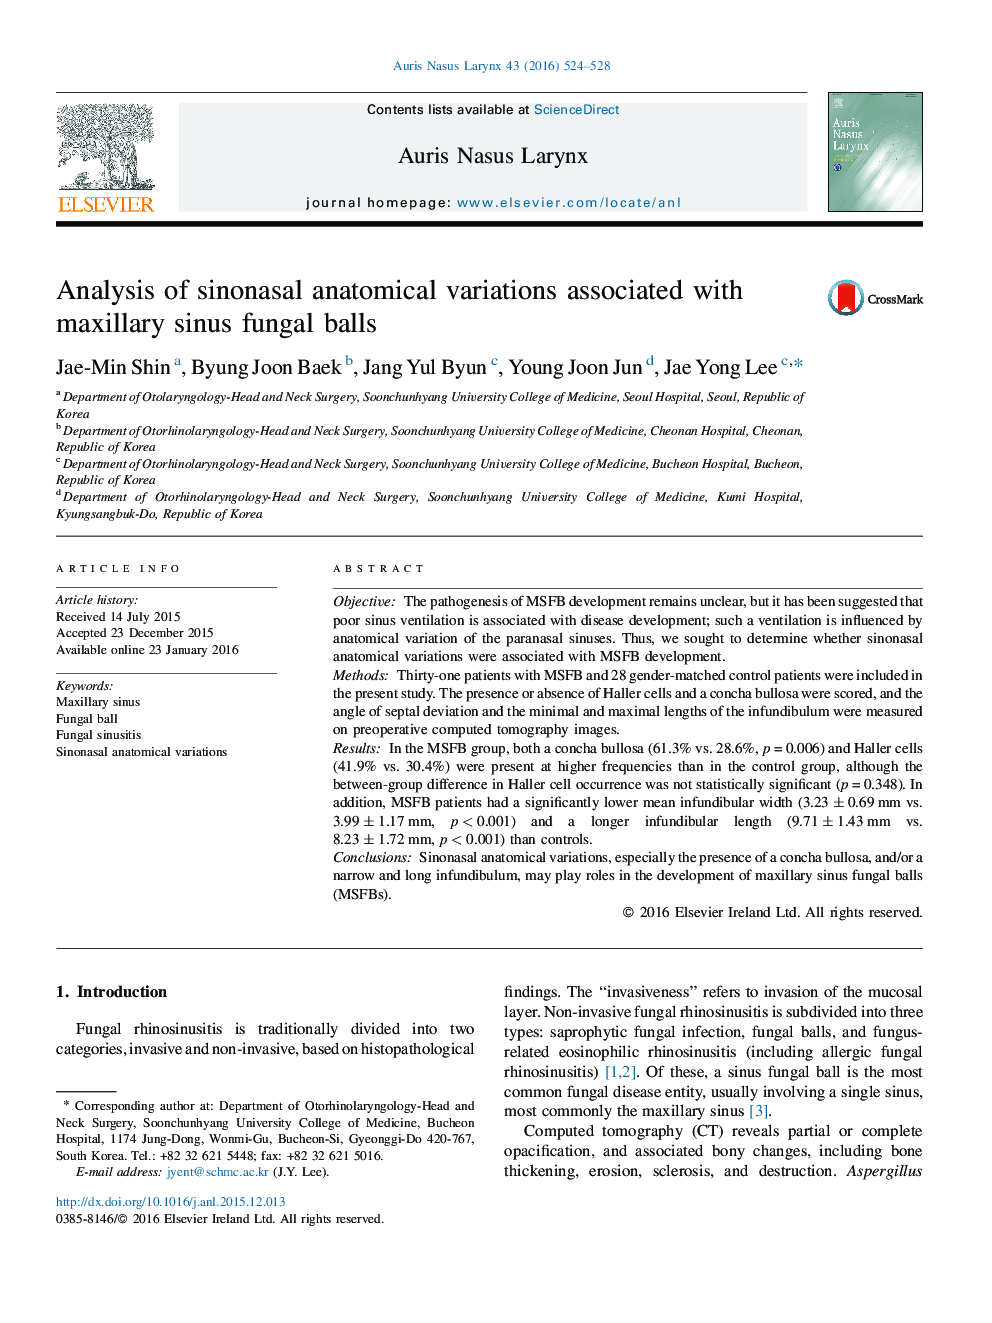 Analysis of sinonasal anatomical variations associated with maxillary sinus fungal balls